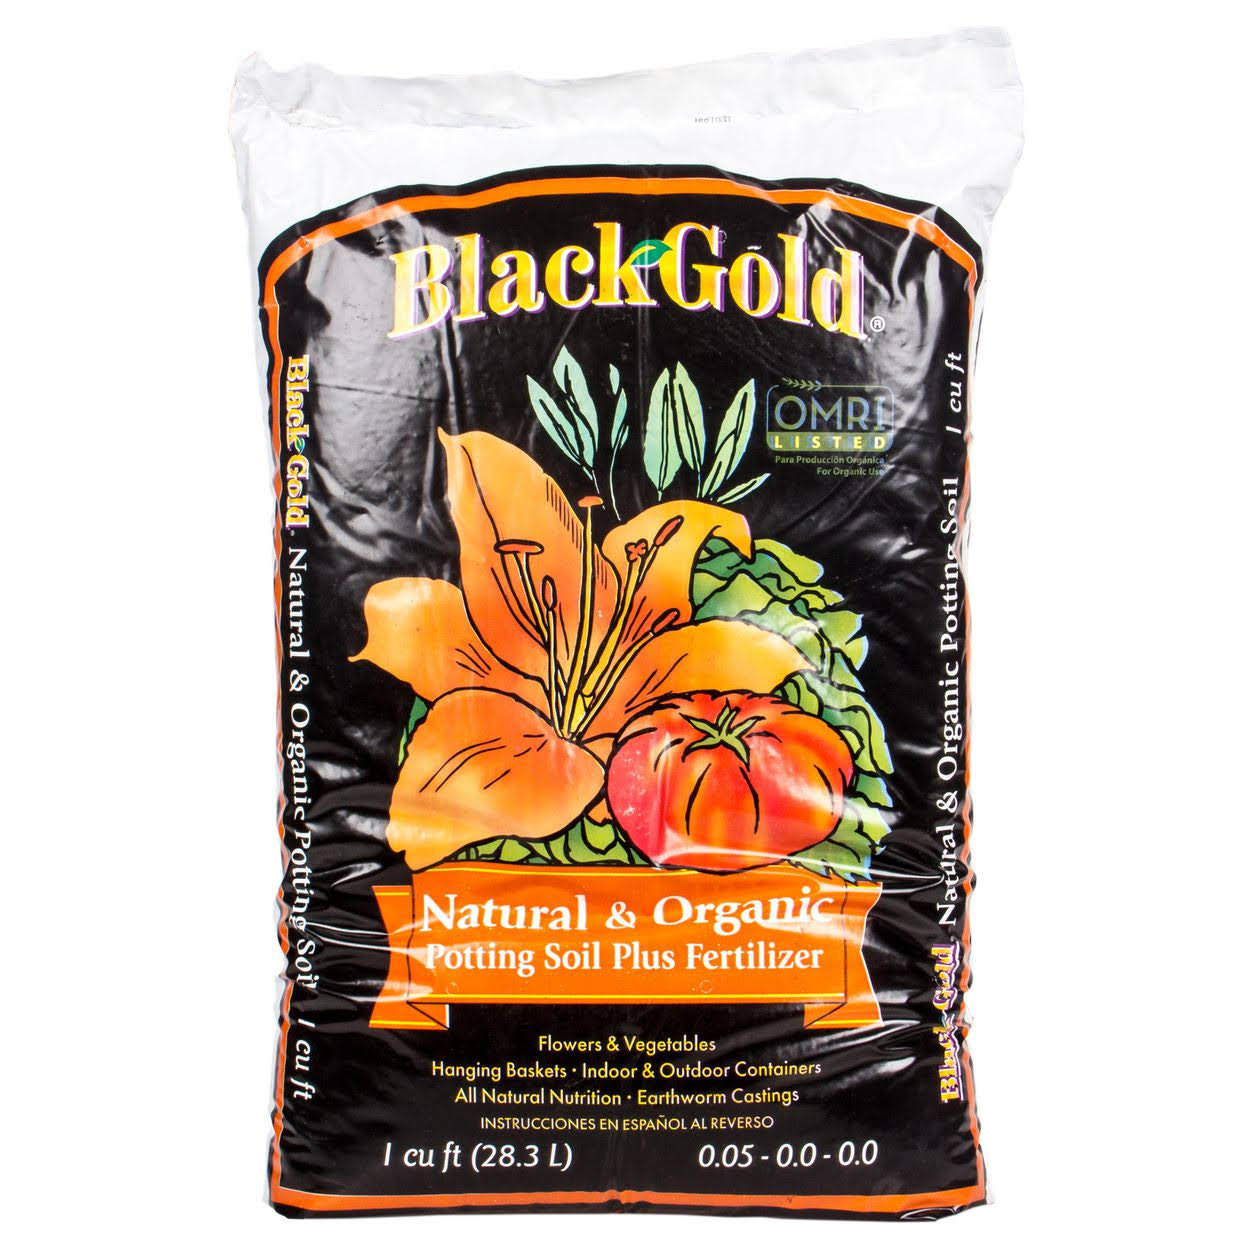 Black Gold Natural & Organic Potting Soil Plus Fertilizer - 40lb